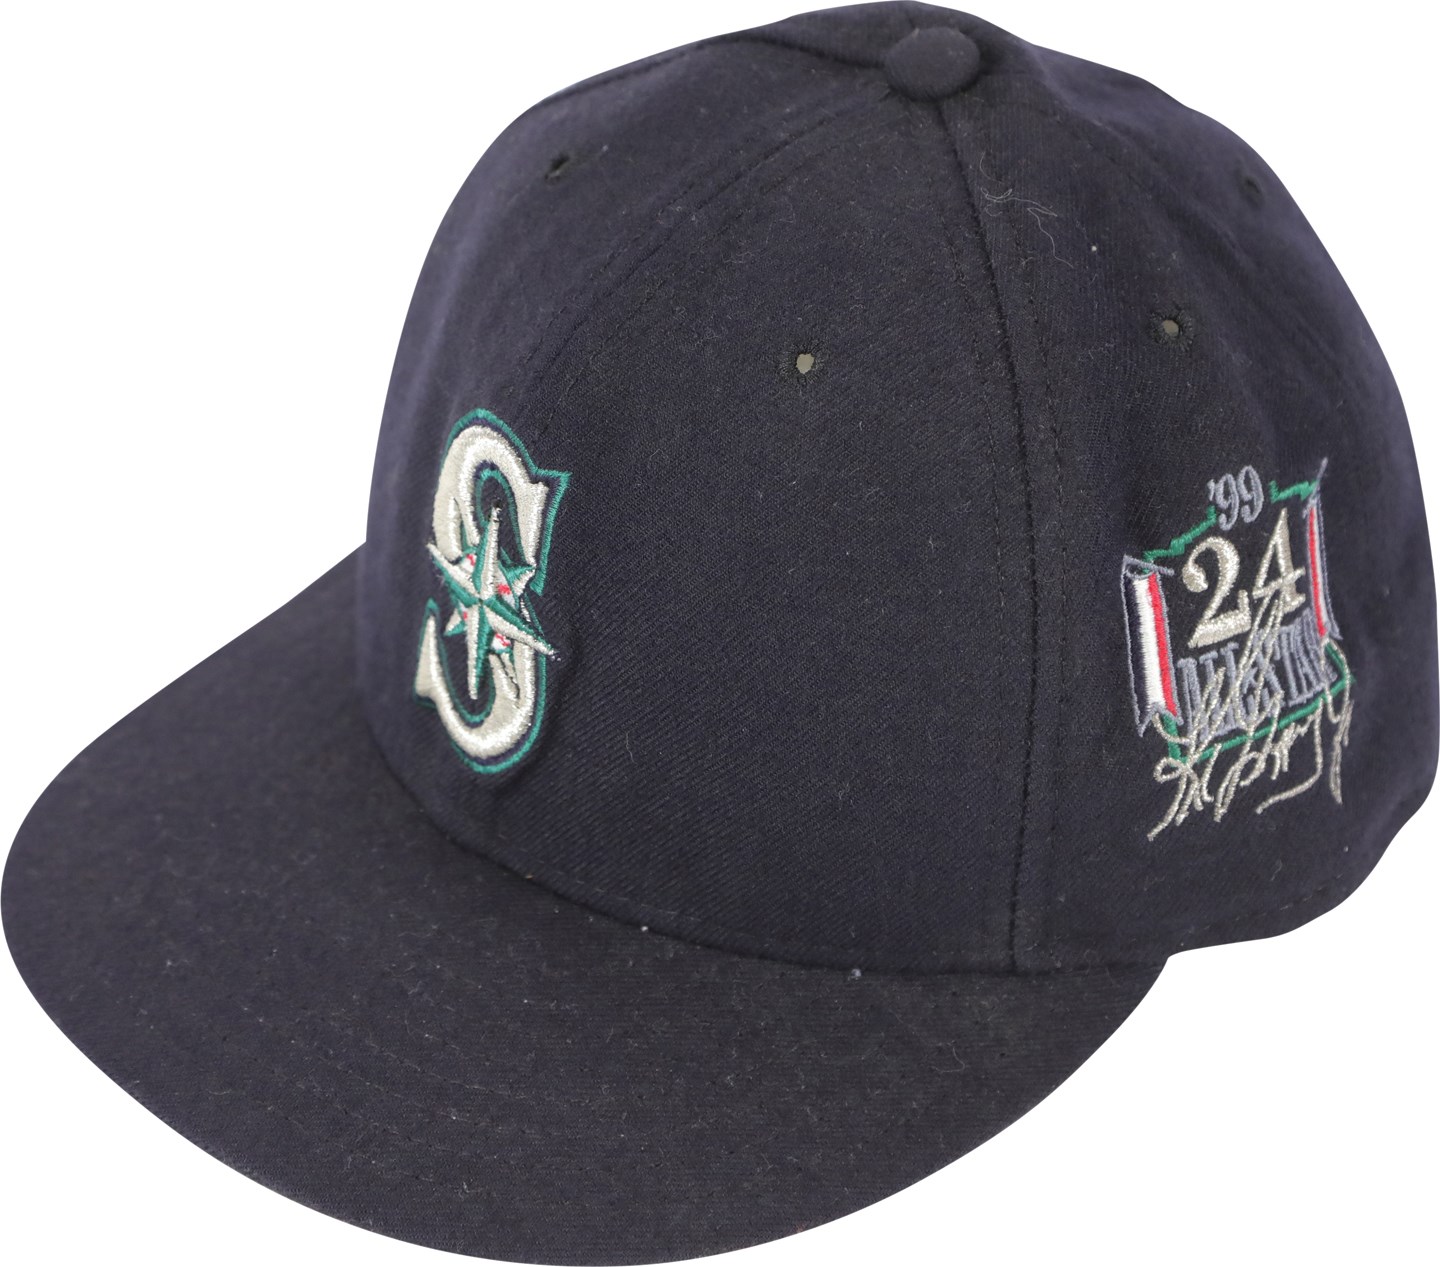 Baseball Equipment - 1999 Ken Griffey Jr. Home Run Derby Victory & All Star Game Worn Hat (Photo-Matched)